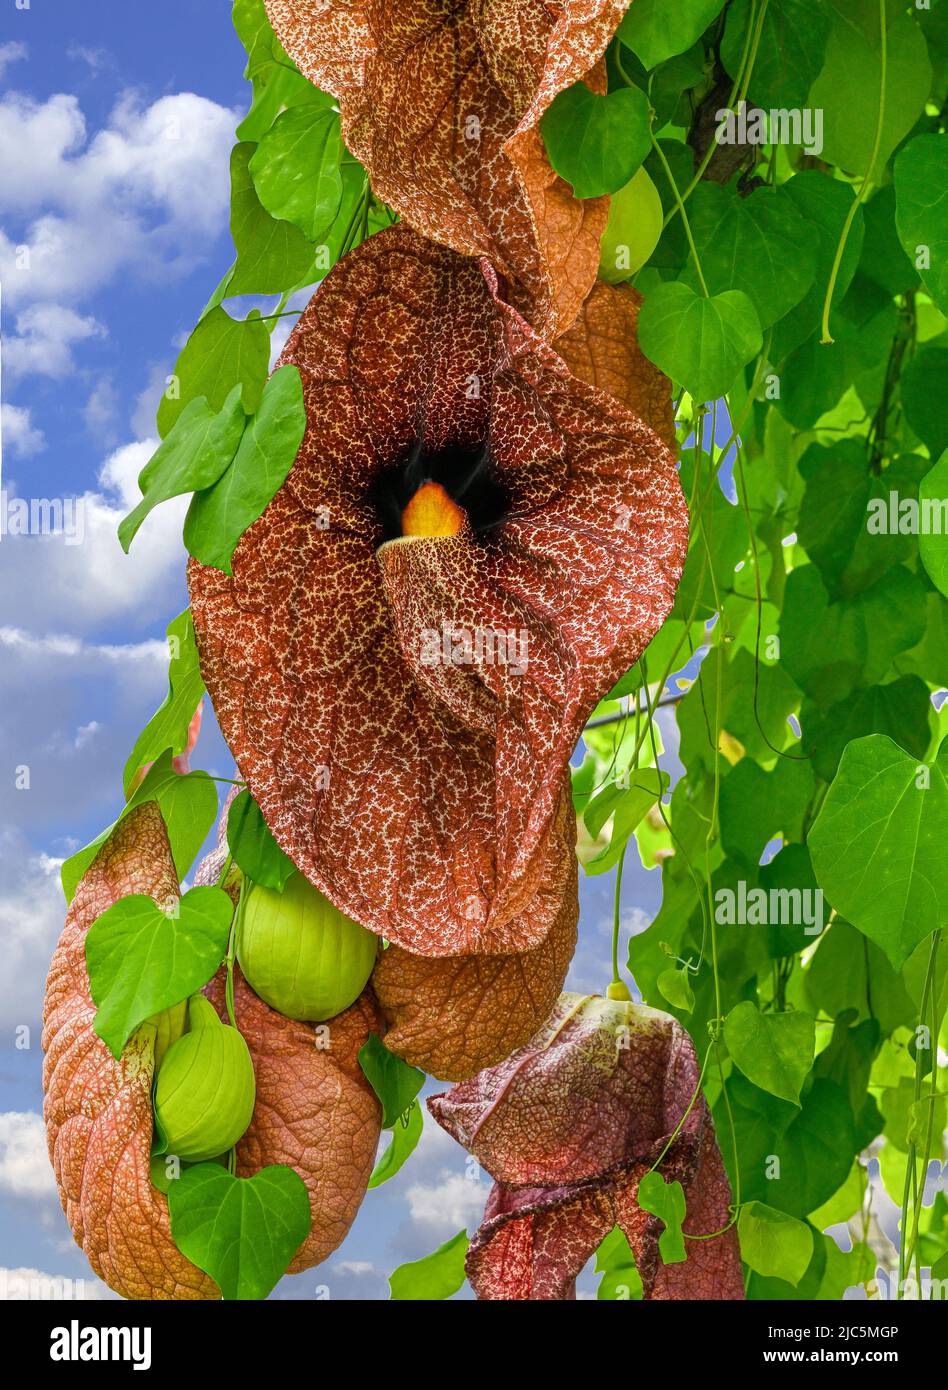 Giant Pelican Flower or Brazilian Dutchman‘s Pipe (Aristolochia gigantea), flowers, native to Brazil Stock Photo